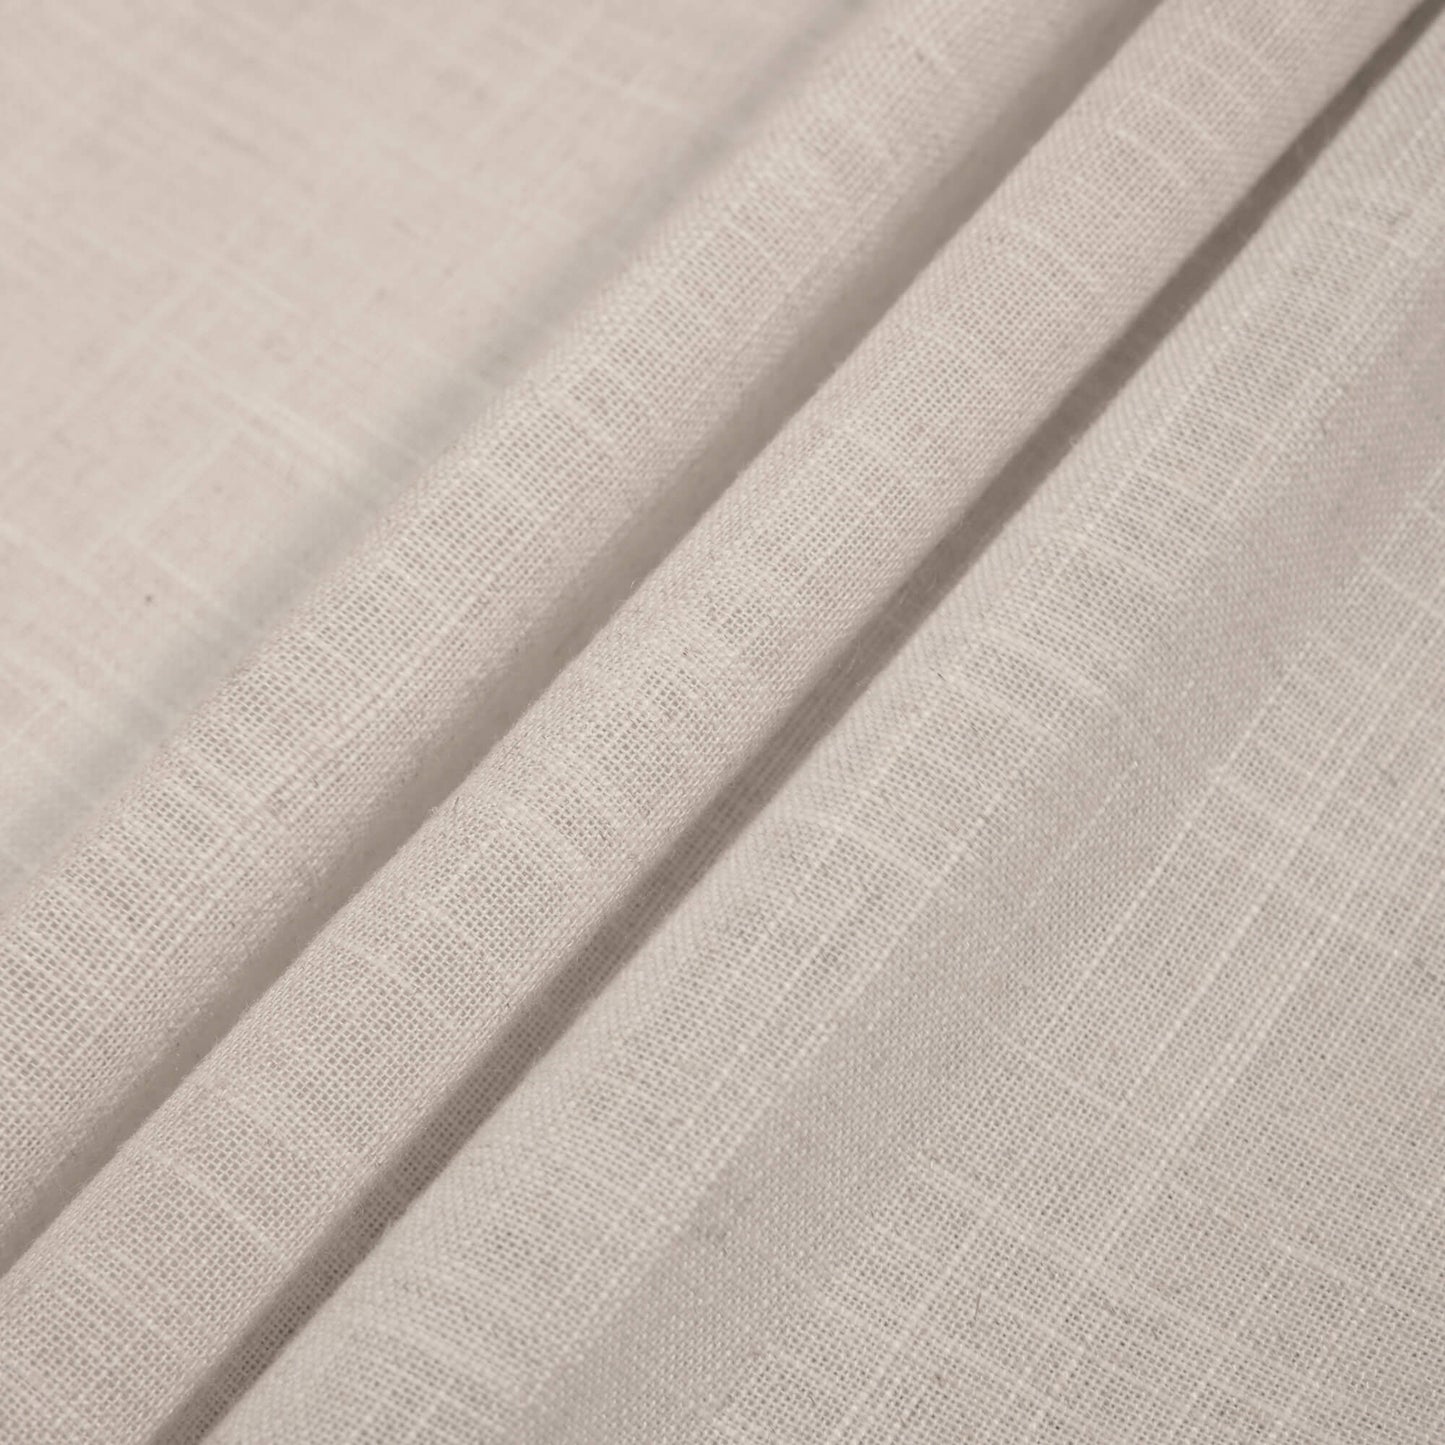 Superion Linen Tablecloth